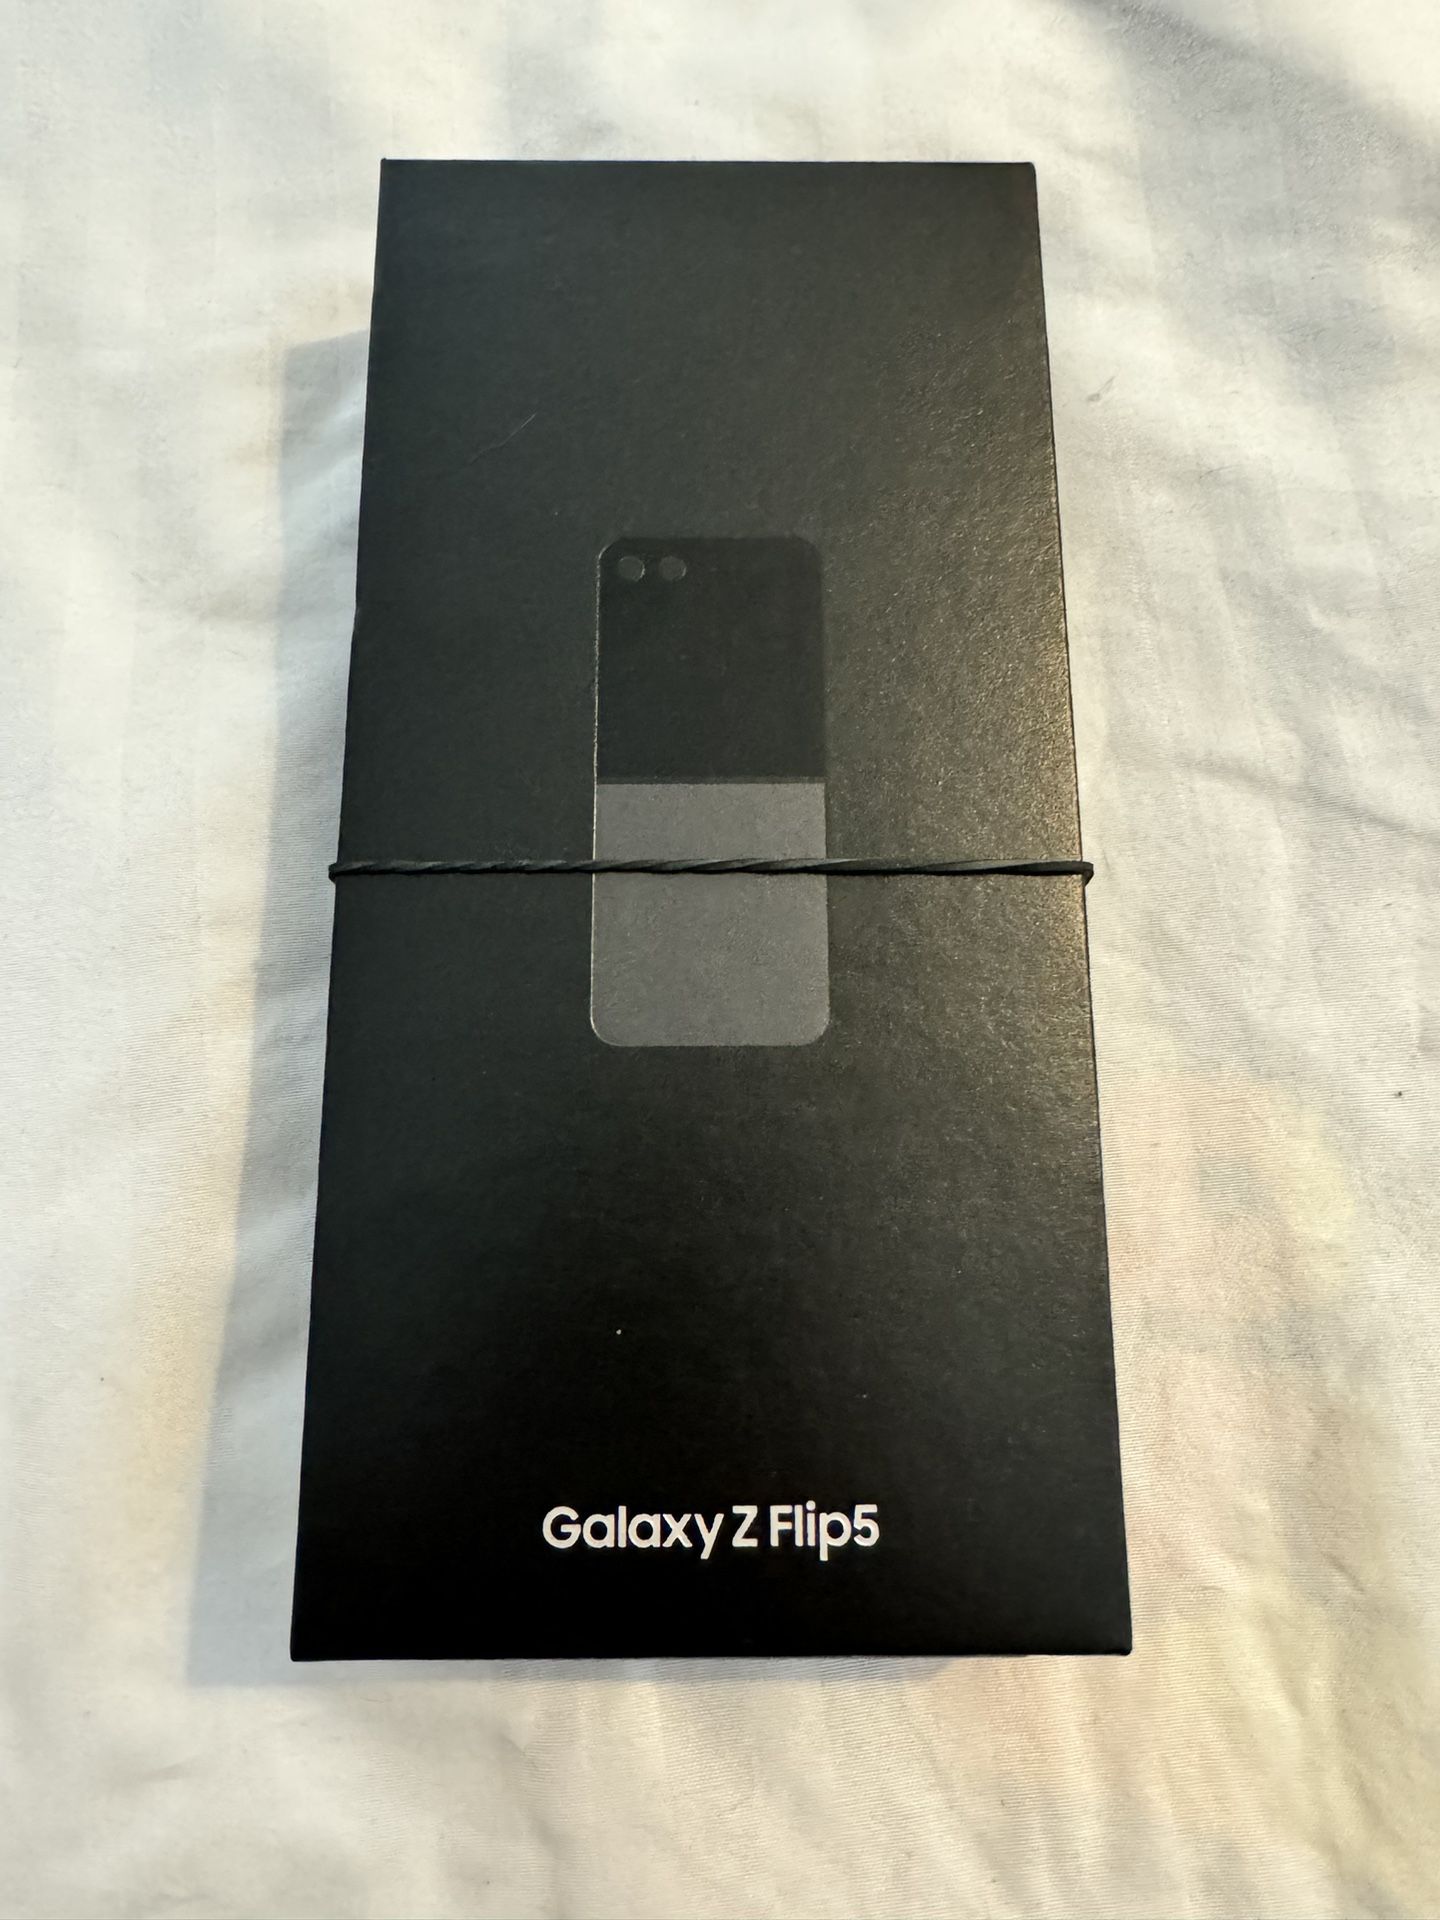 Galaxy Z Flip5 - unlocked